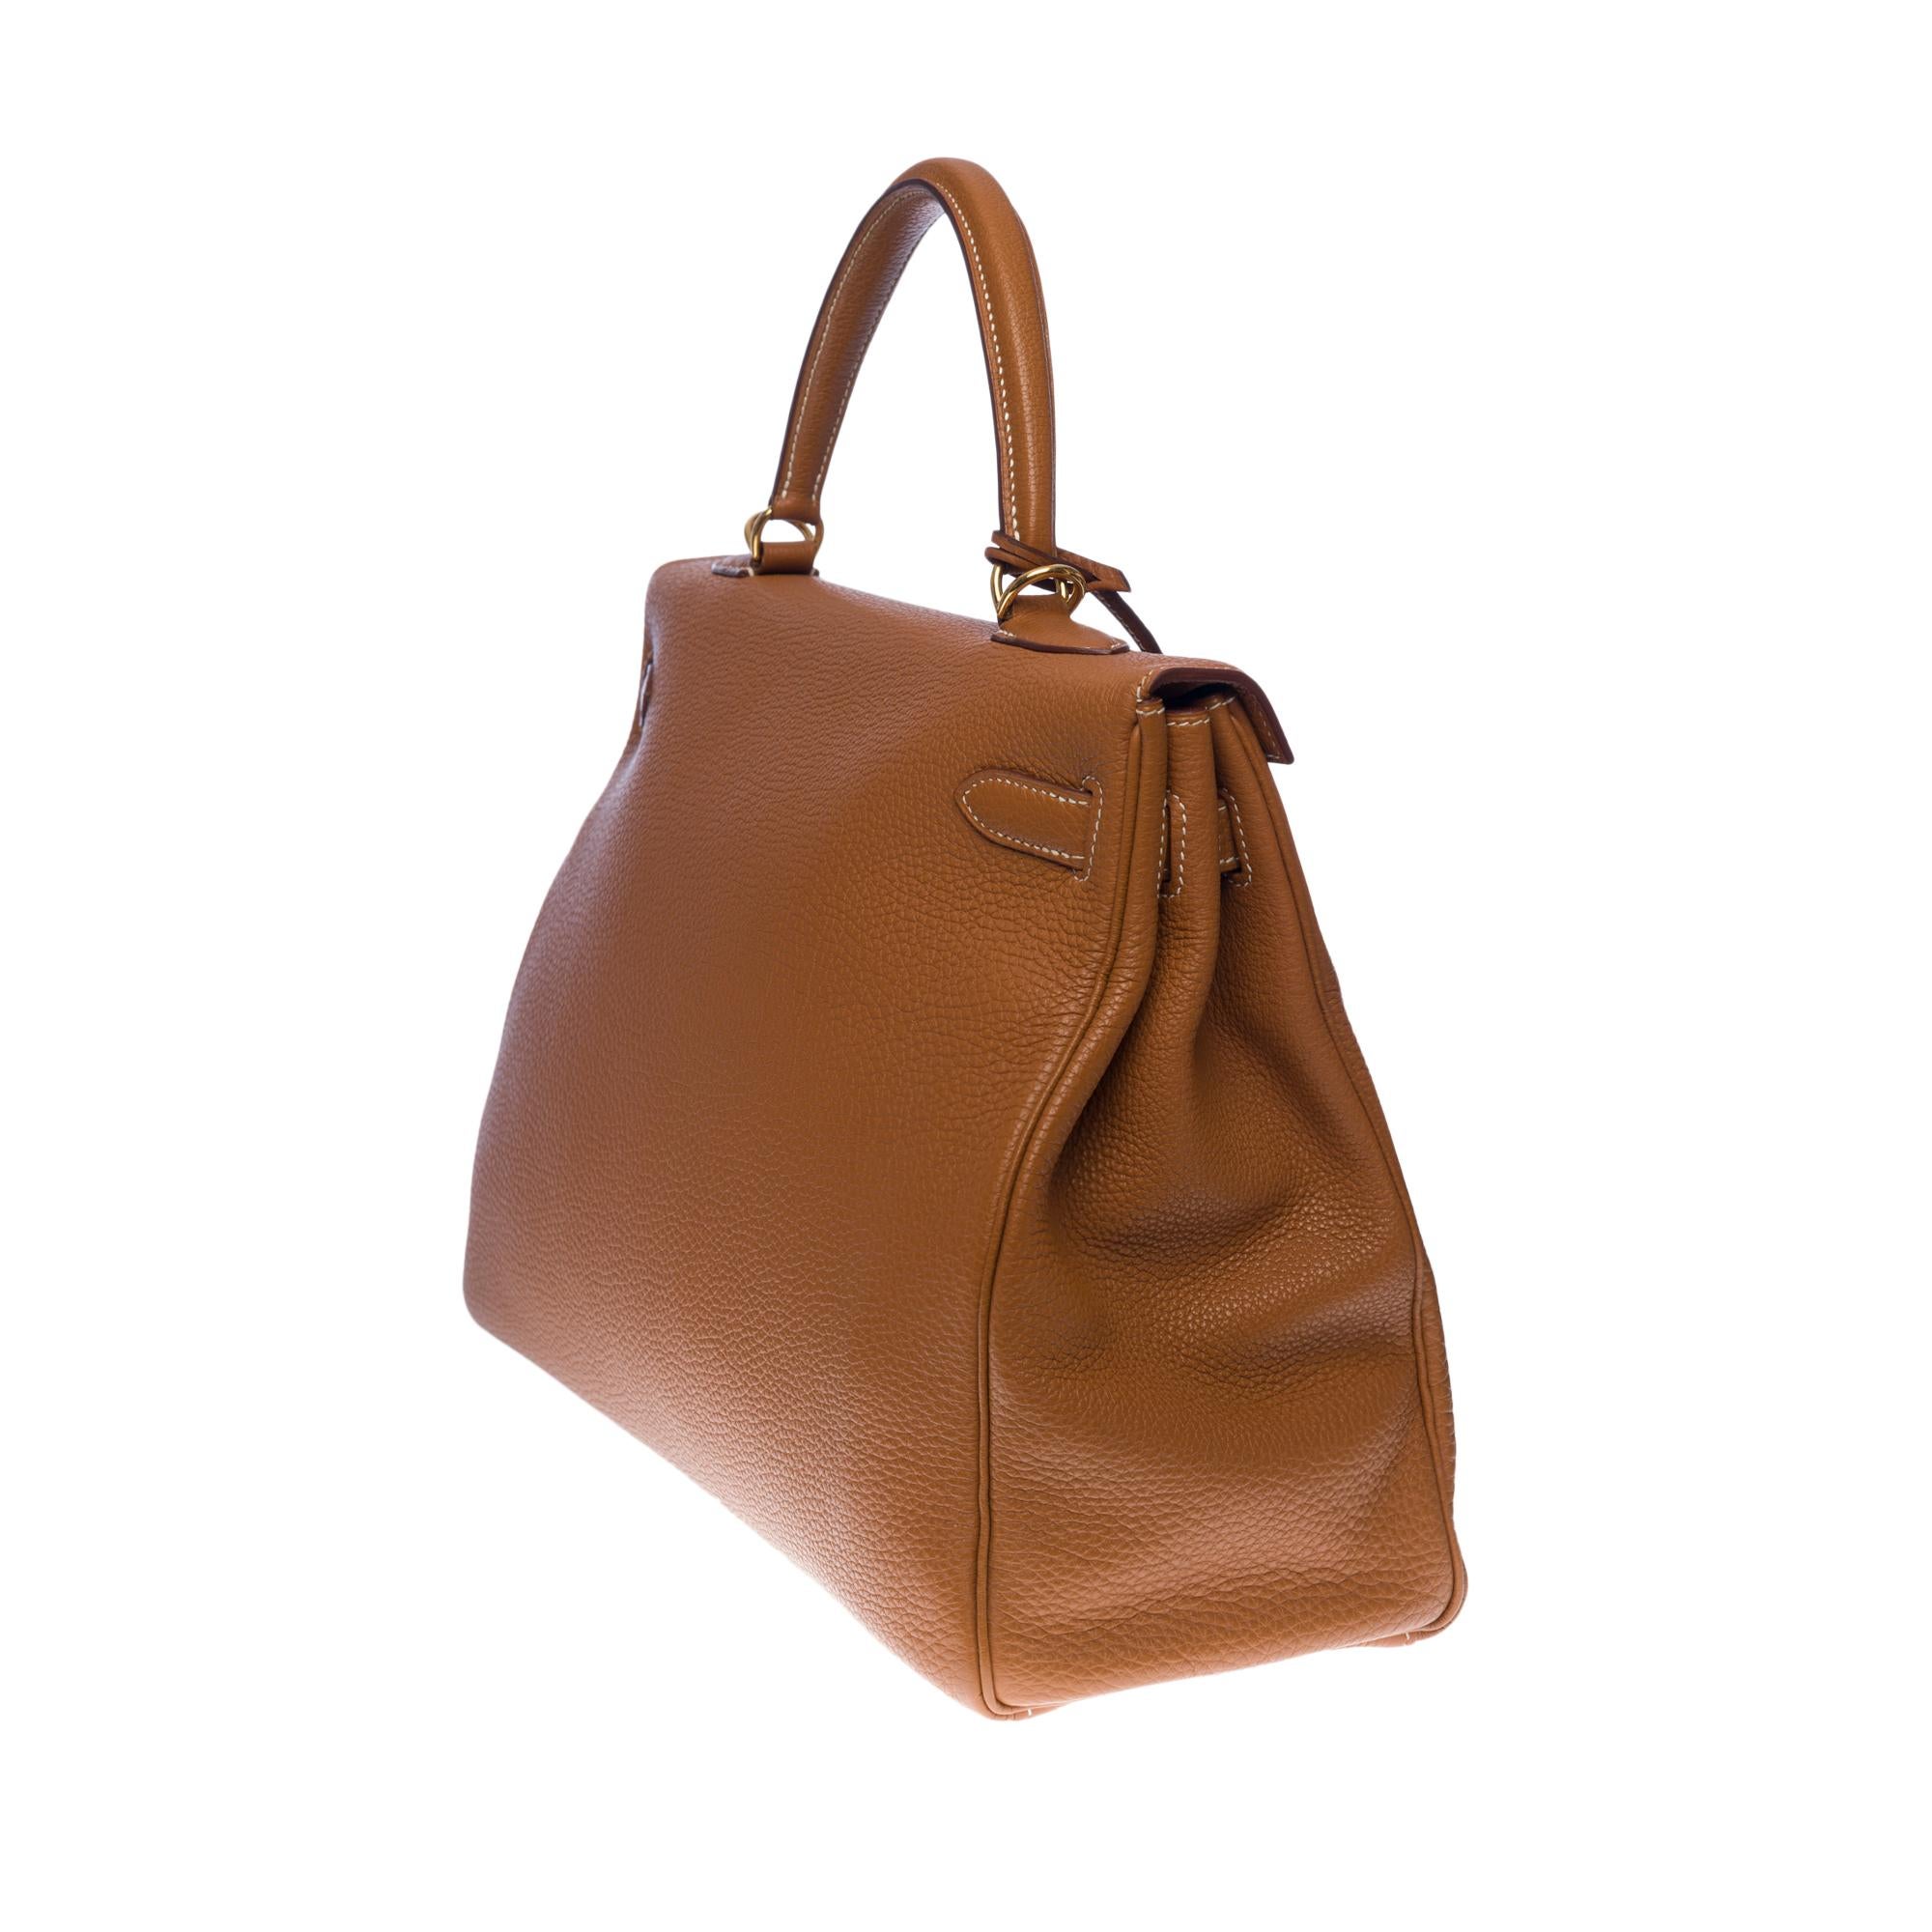 Brown Gorgeous Hermès Kelly 35 retourné handbag strap in Gold Togo leather, GHW